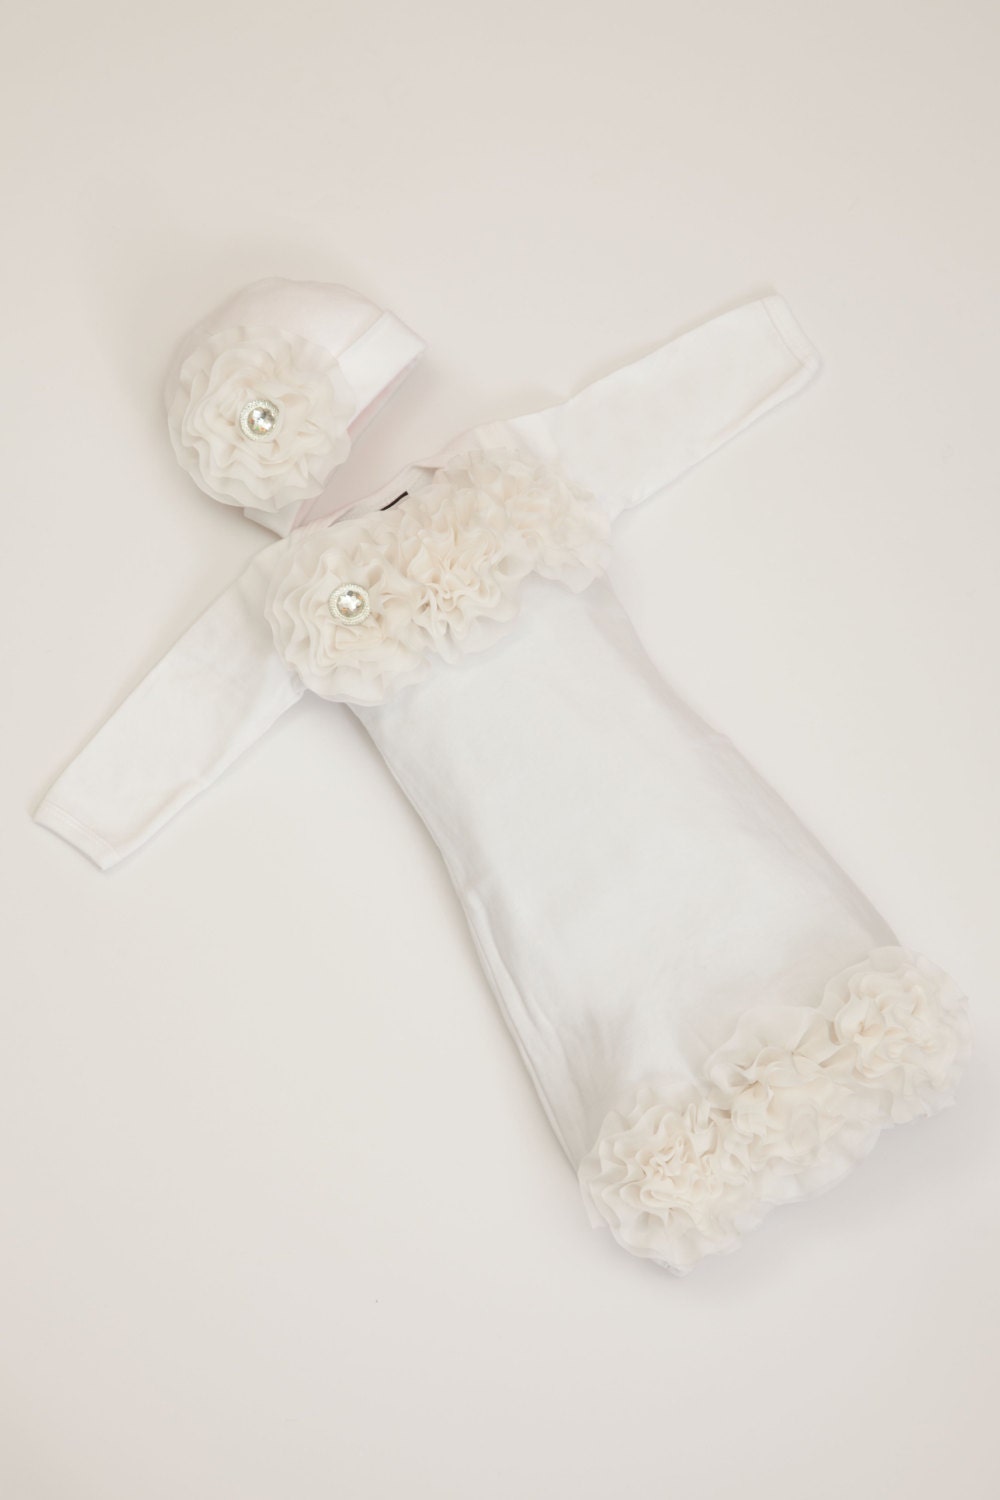 Blank Unisex Long Sleeve Infant Gown with Hidden Zipper